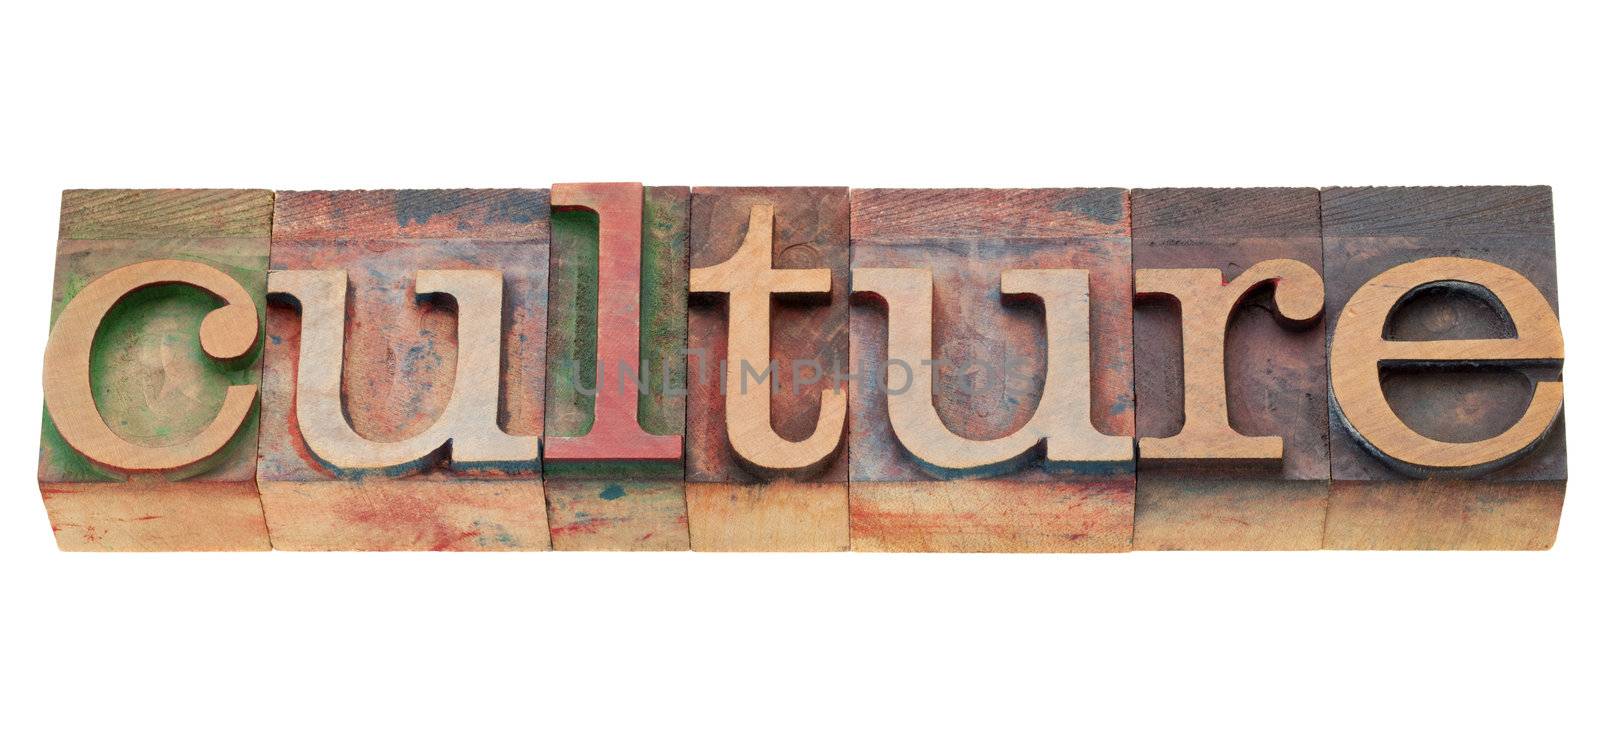 culture - isolated word in vintage wood letterpress printing blocks